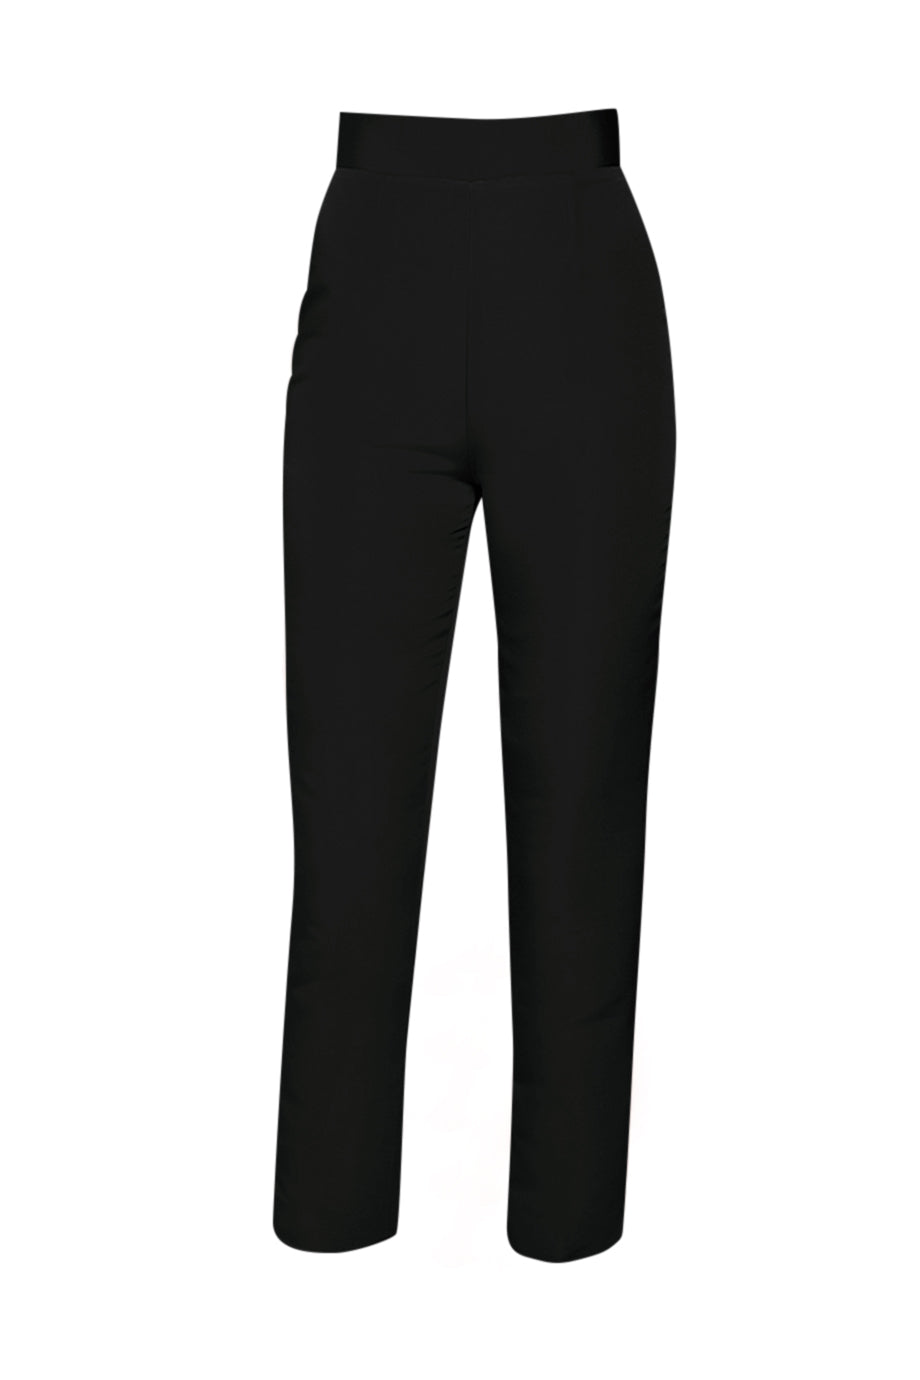 Buy Taffeta Silk Cigarette Pant Suit In Plum Colour Online - LSTV03436-Plum  | Andaaz Eid Store